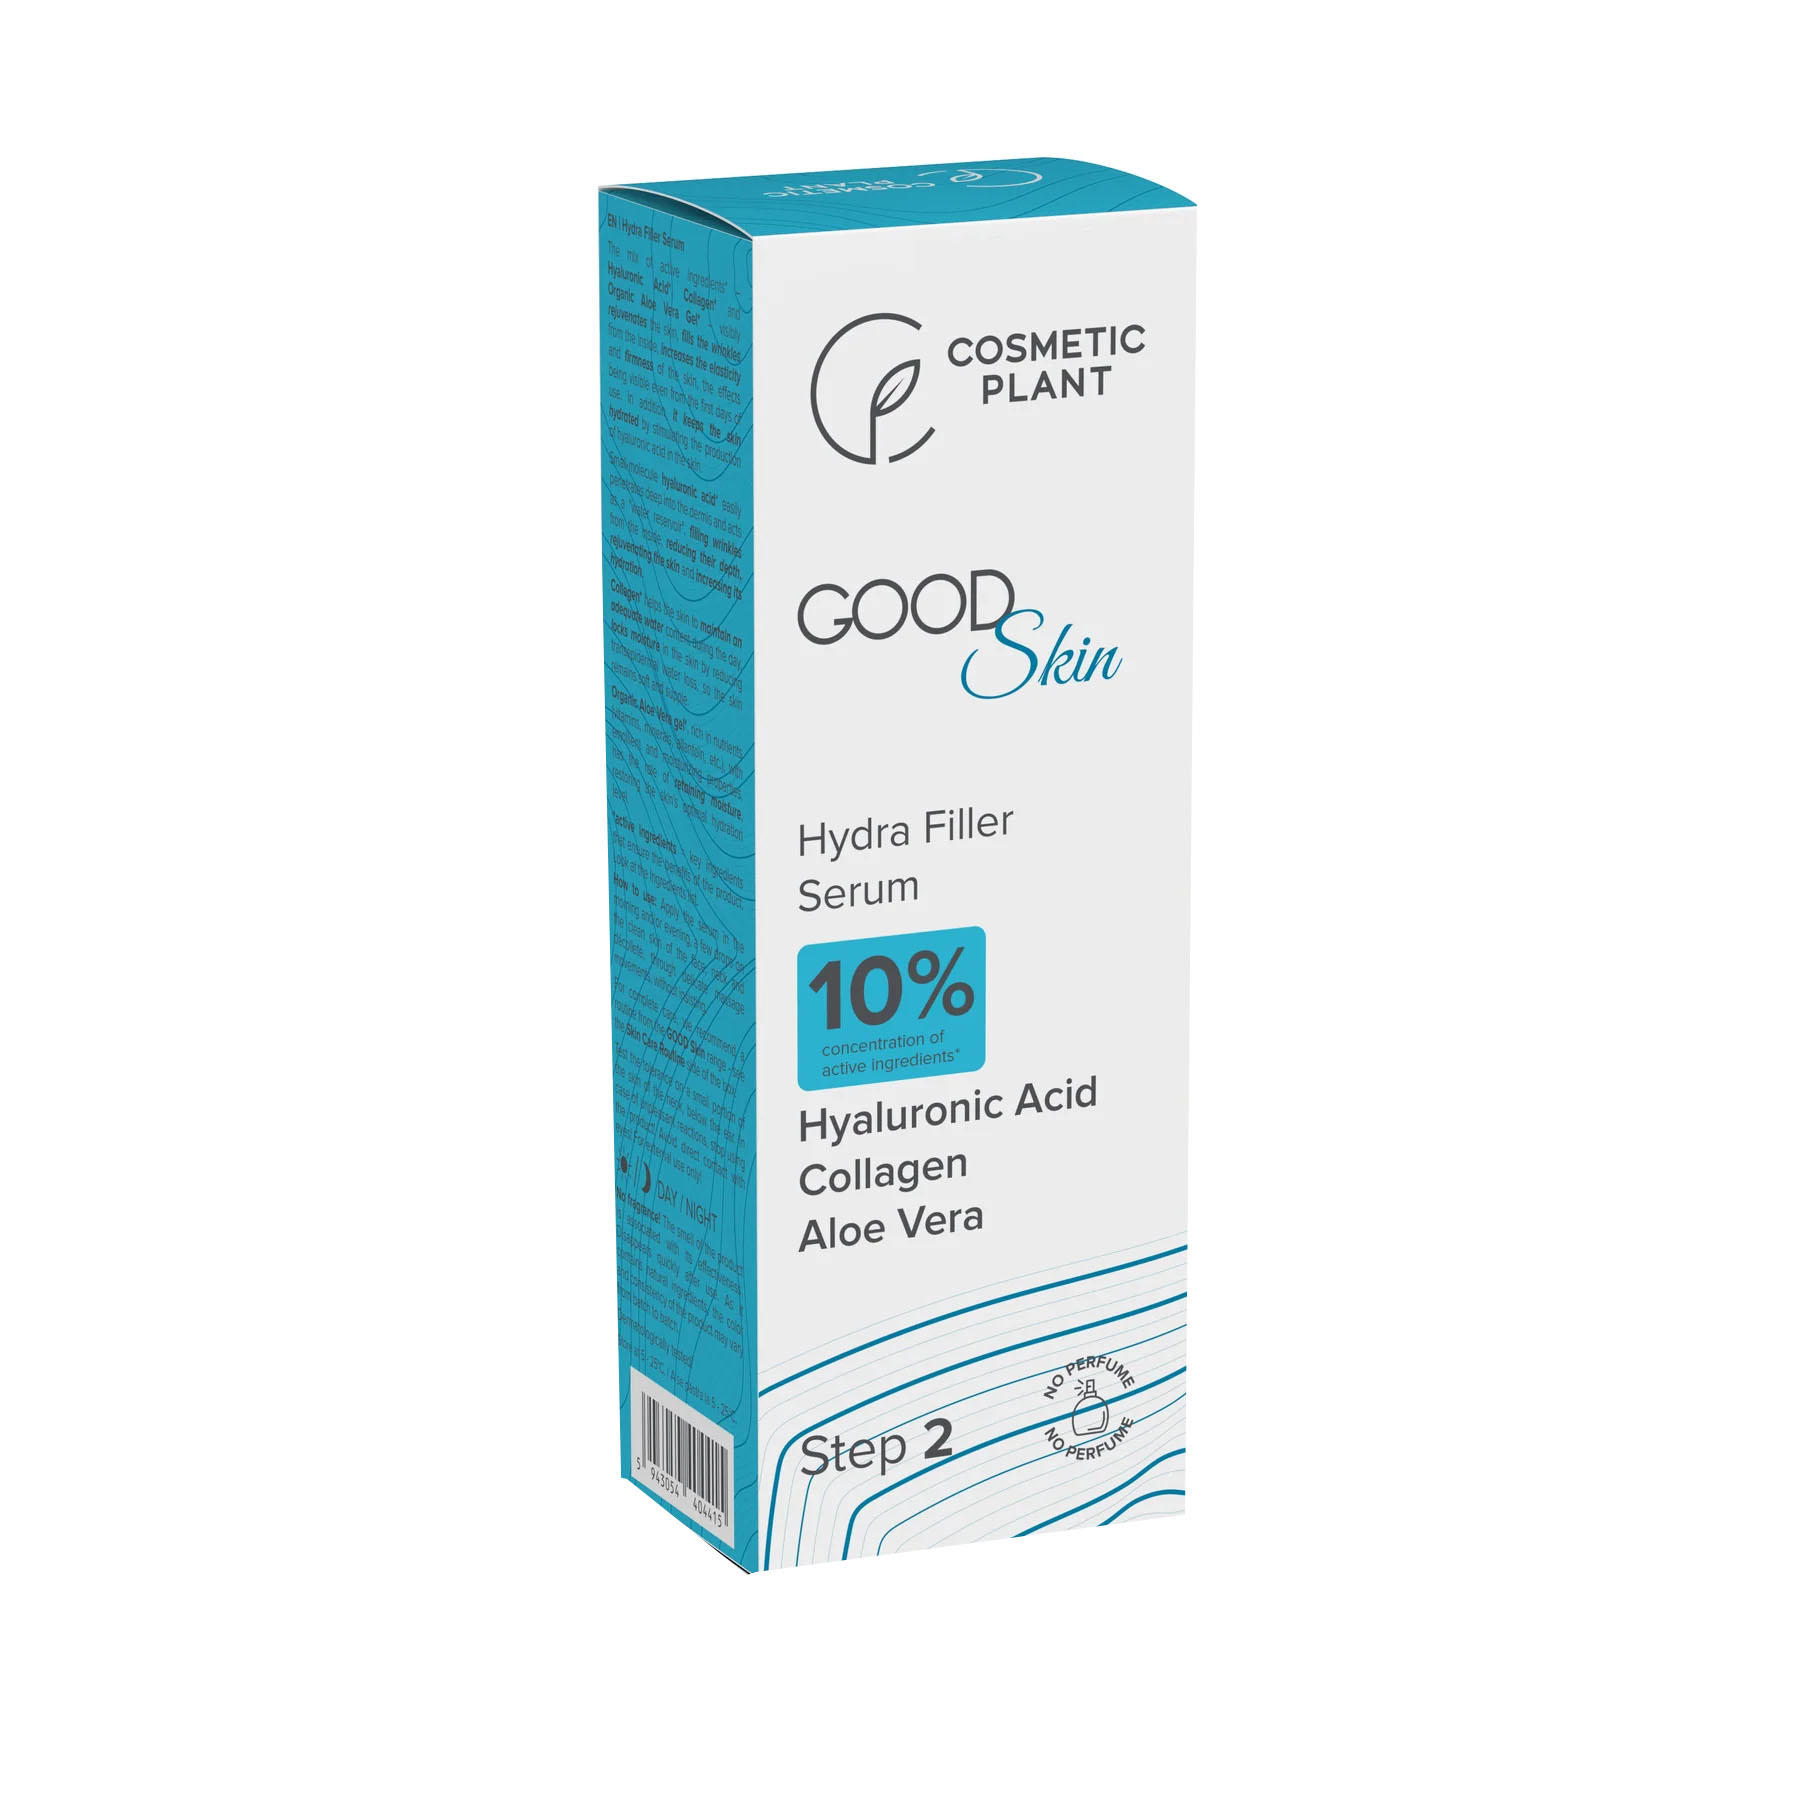 Good Skin Hydra Filler Serum cu Acid Hialironic, Colagen si Aloe Vera 30 mililitri Cosmetic Plant